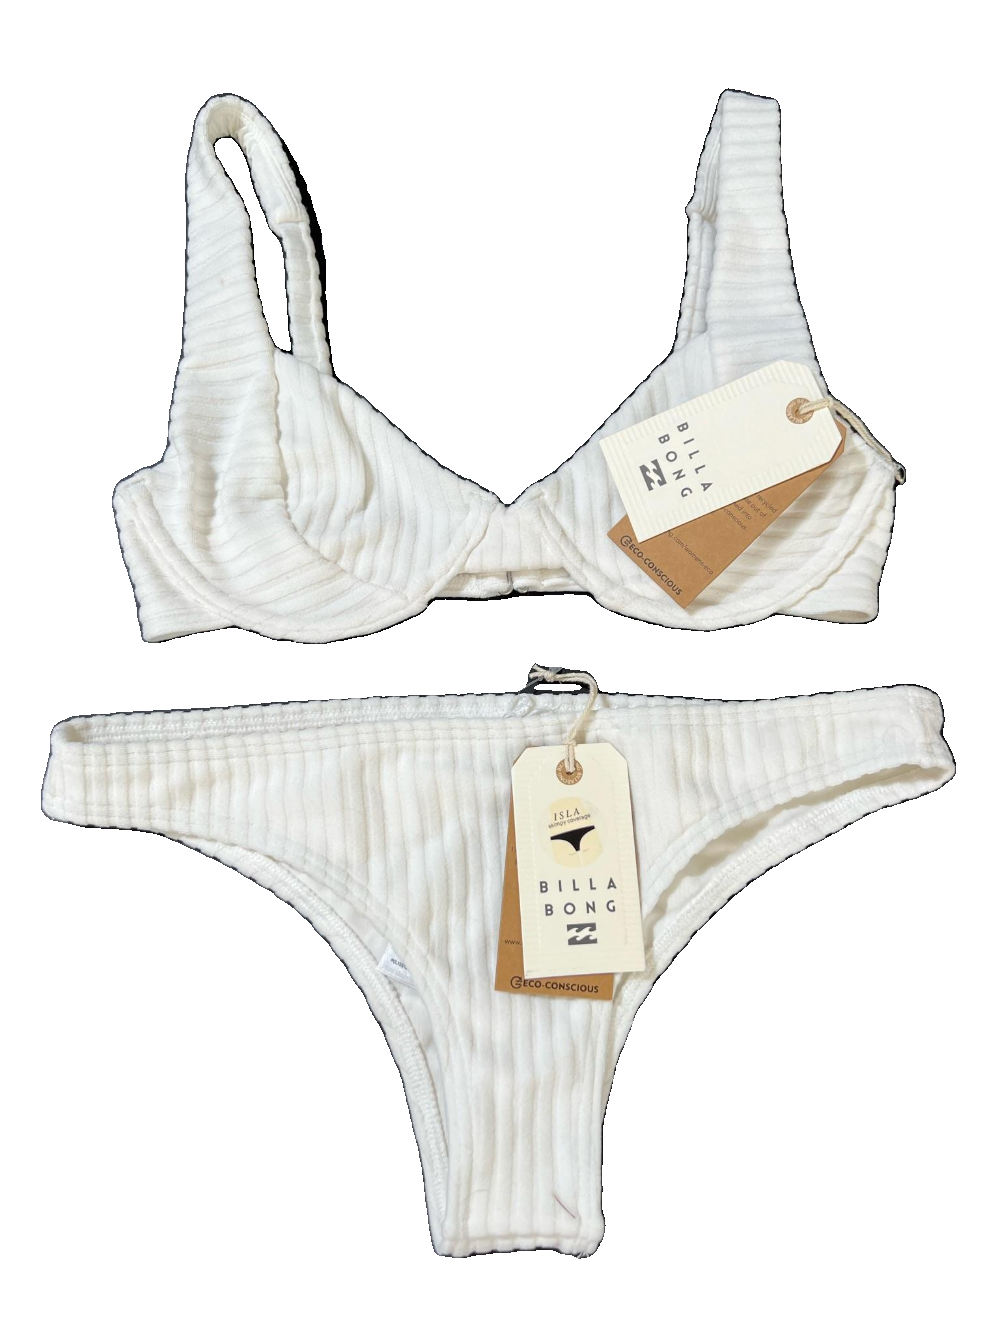 Billabong- White Bikini NEW WITH TAGS